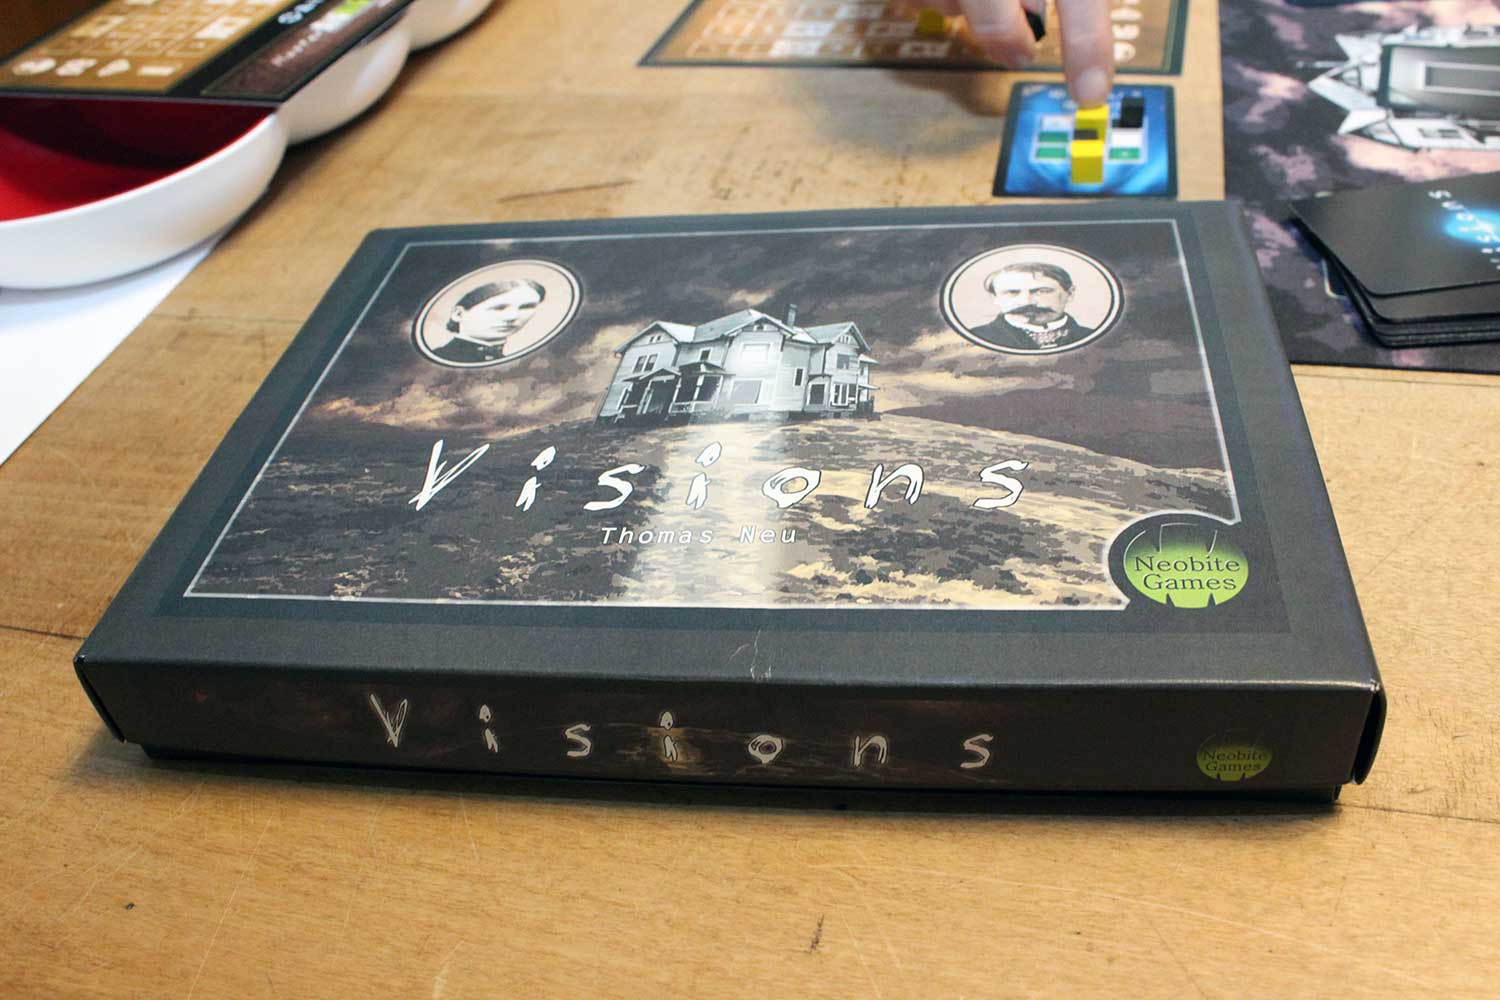 Visions - Kickstarter Spiel angespielt (Prototyp)